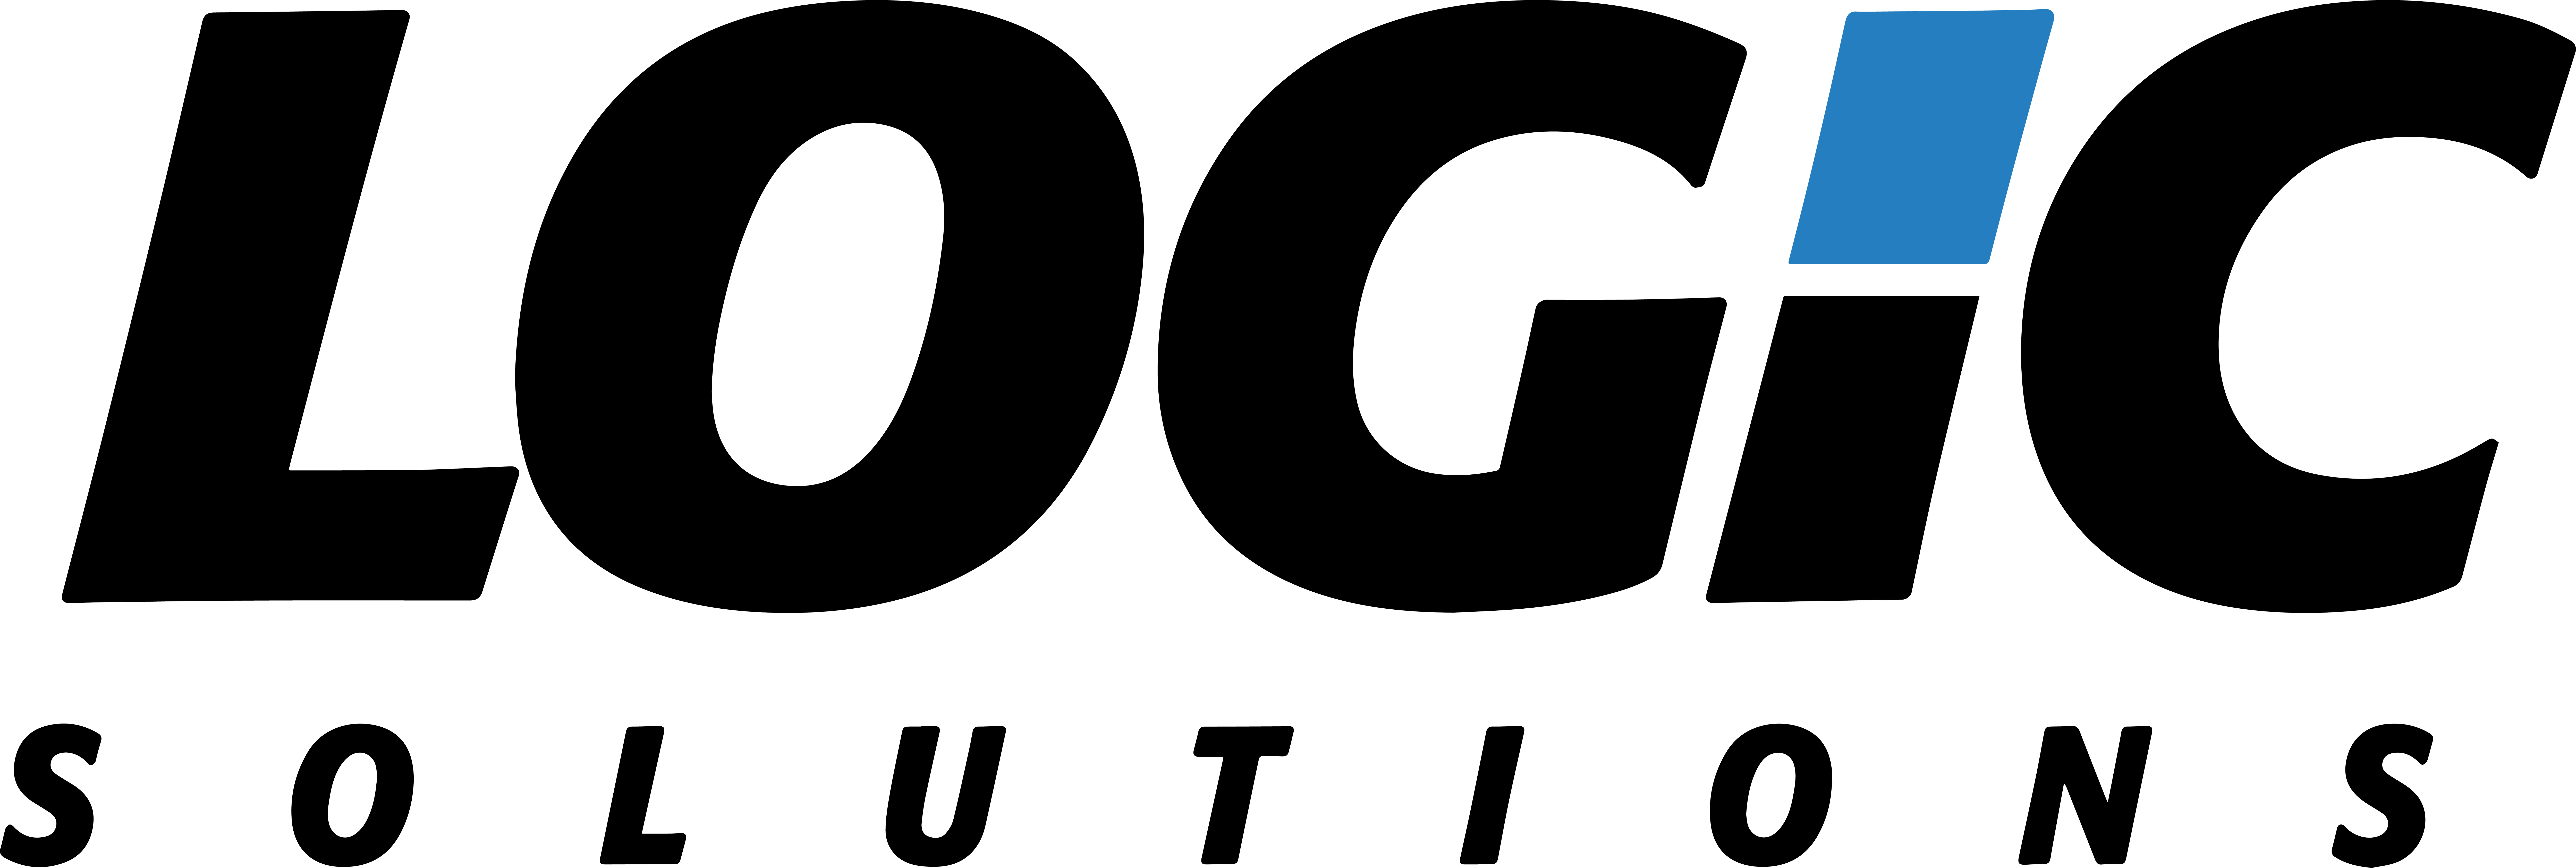 Software engineer (Java) logo